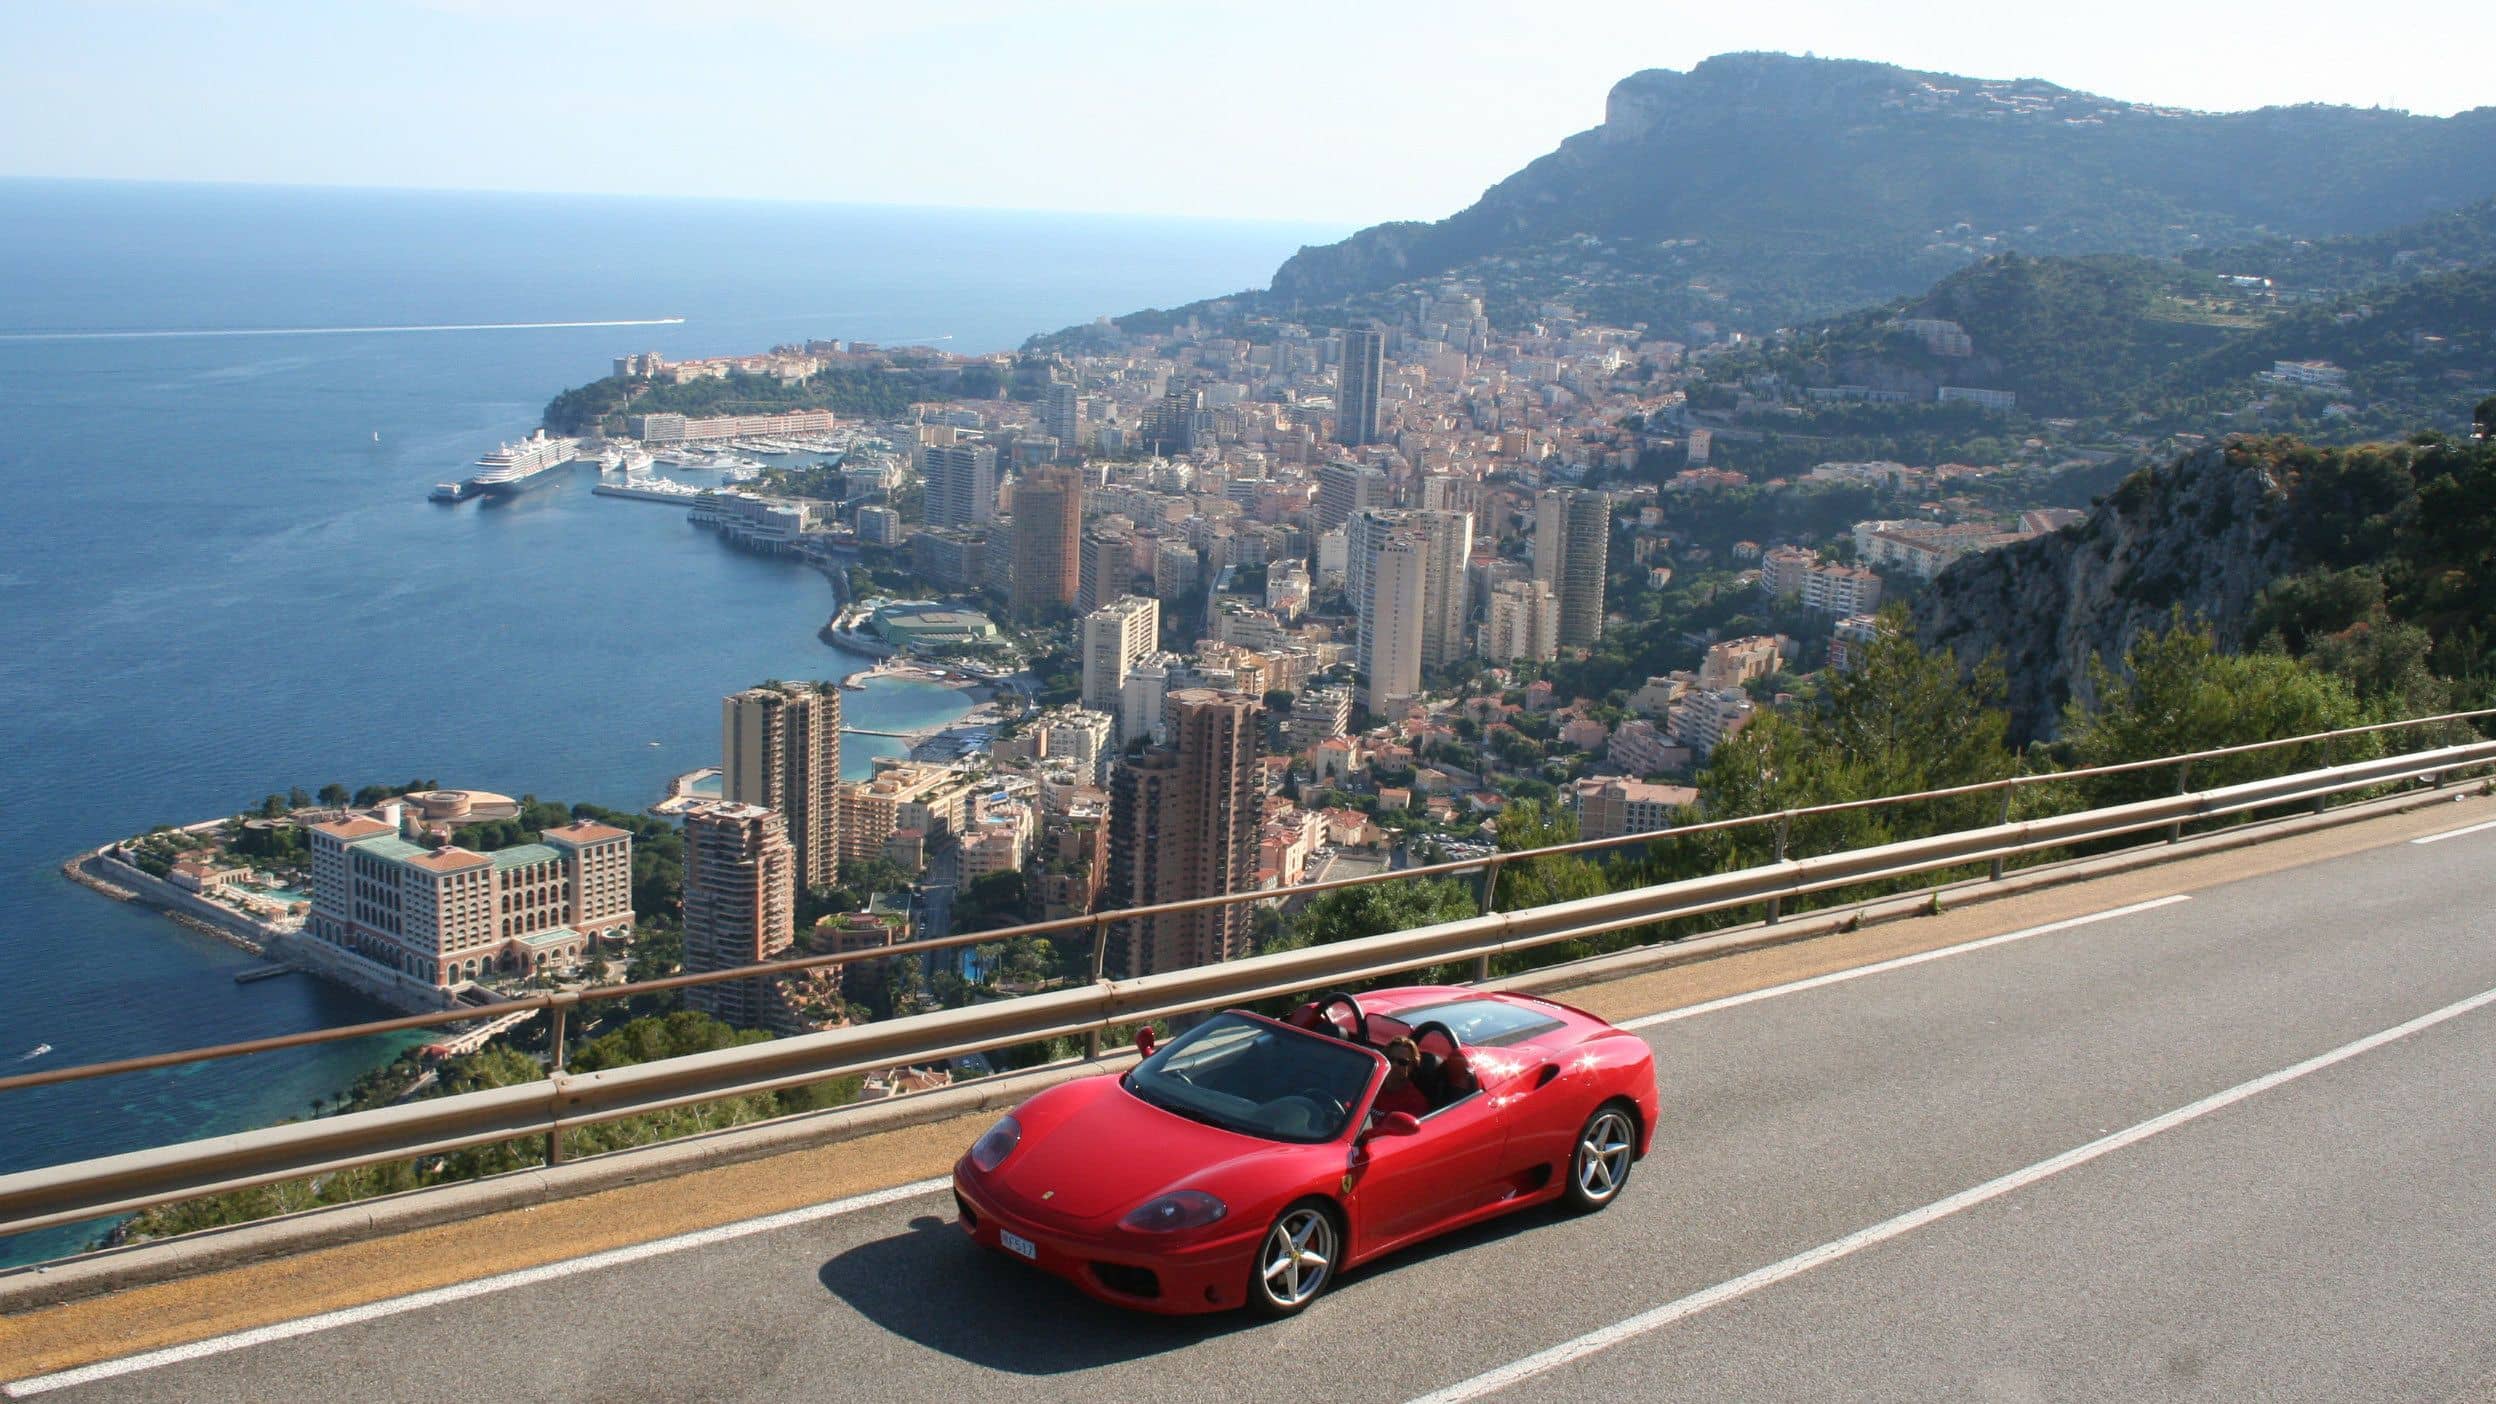 Driving a red Ferrari in France